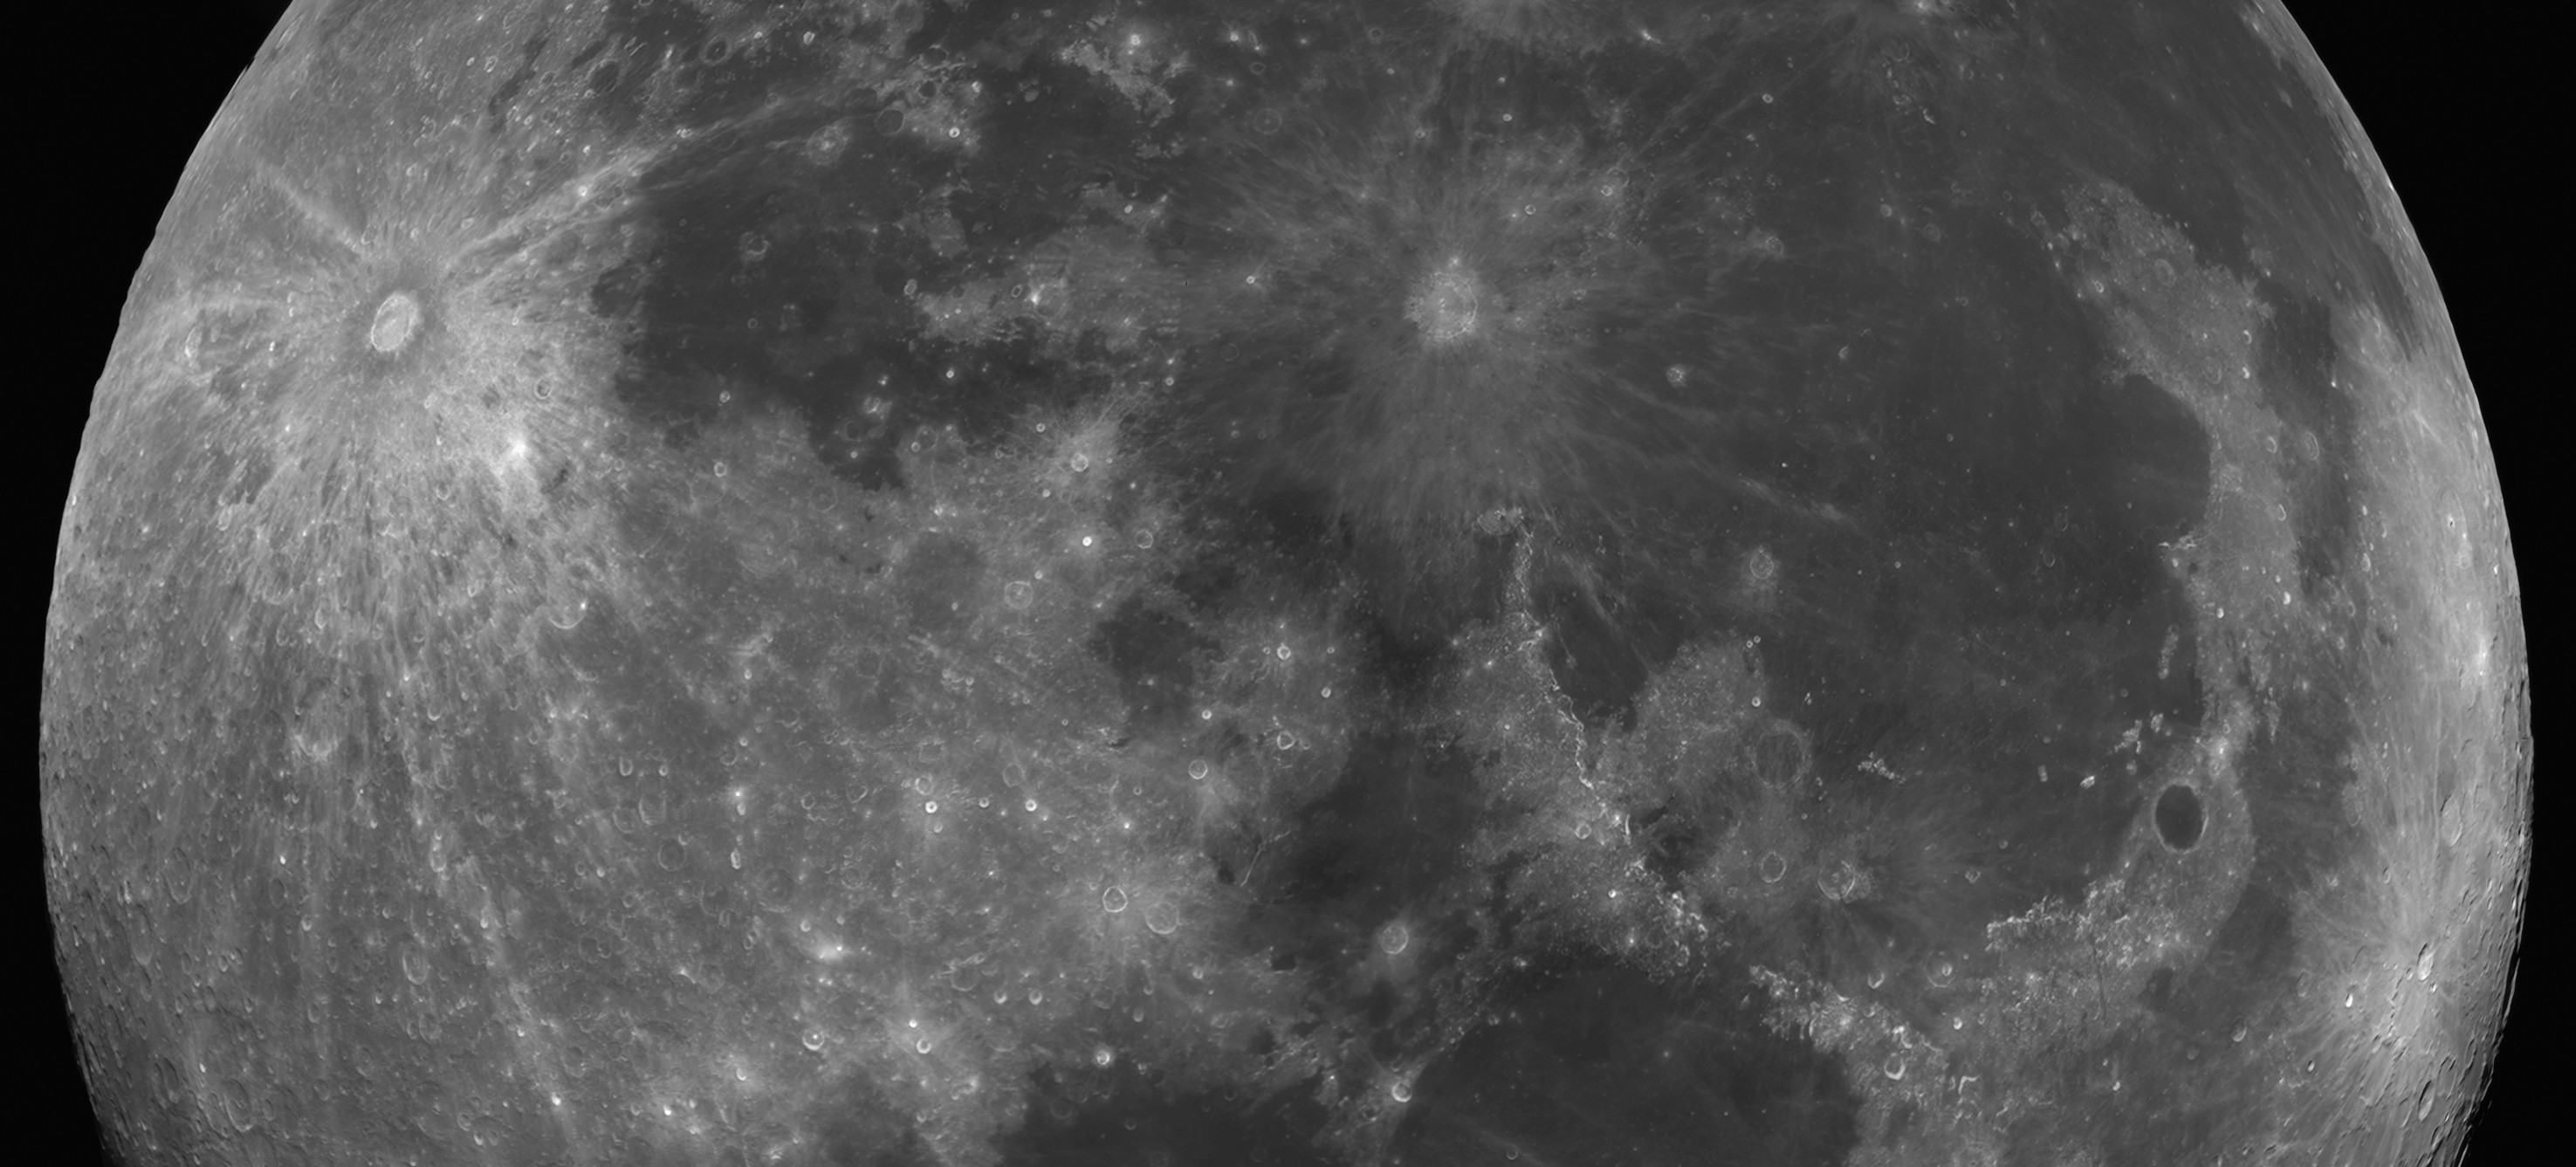 20161115 moon arc7prototype visac asi174mm 32frames mosic.jpg